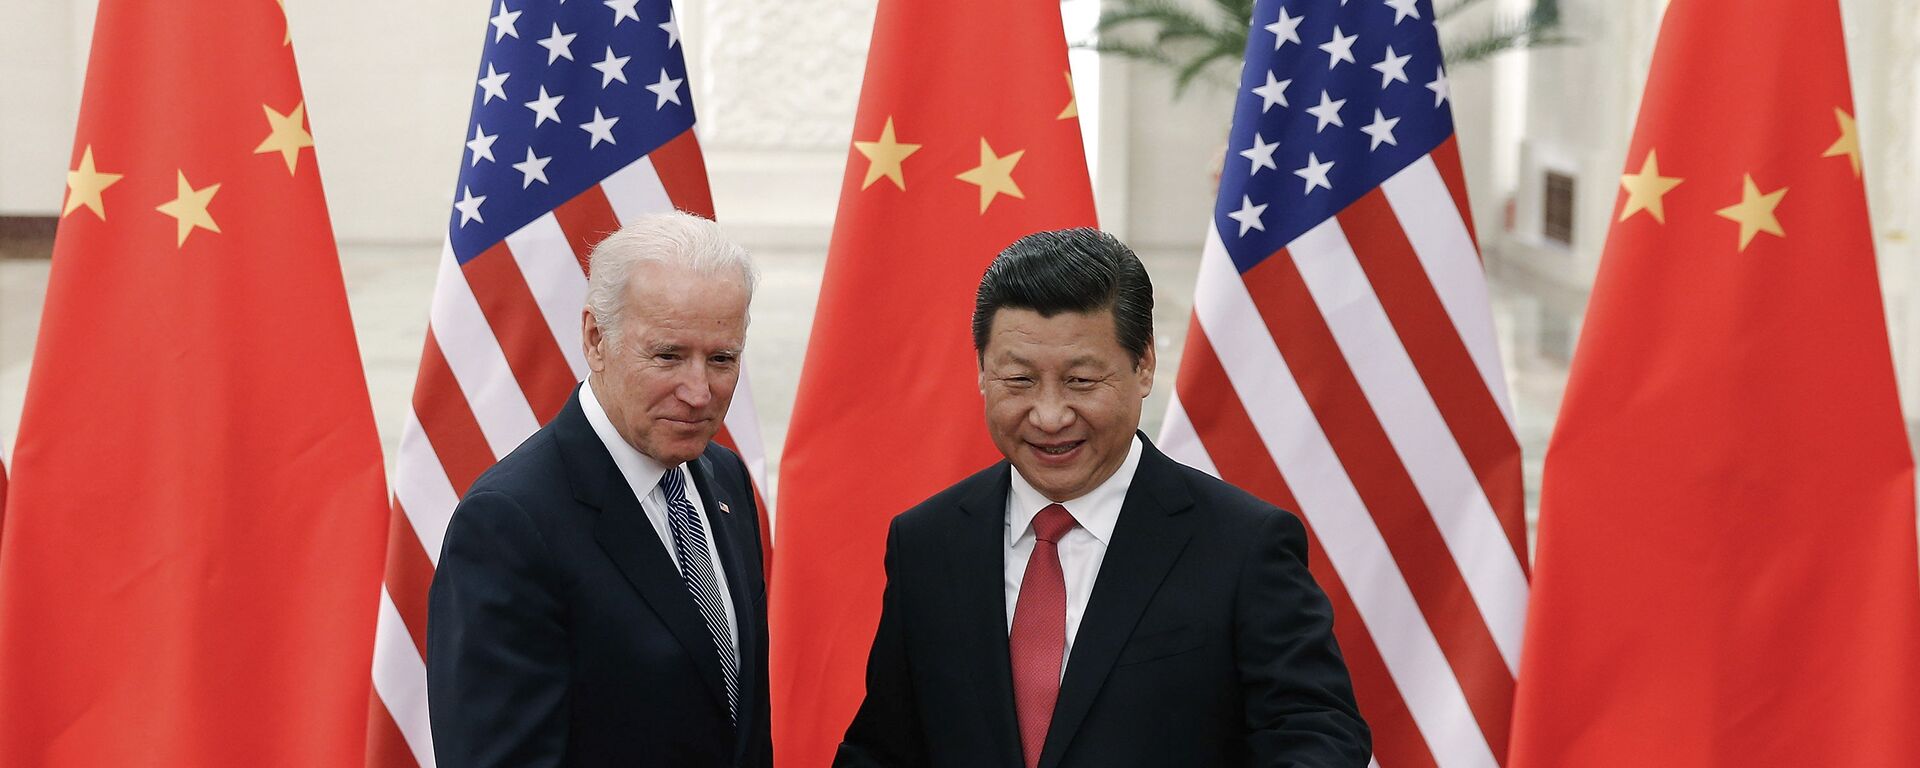 El presidente chino, Xi Jinping con su homólogo de EEUU, Joe Biden - Sputnik Mundo, 1920, 10.09.2021